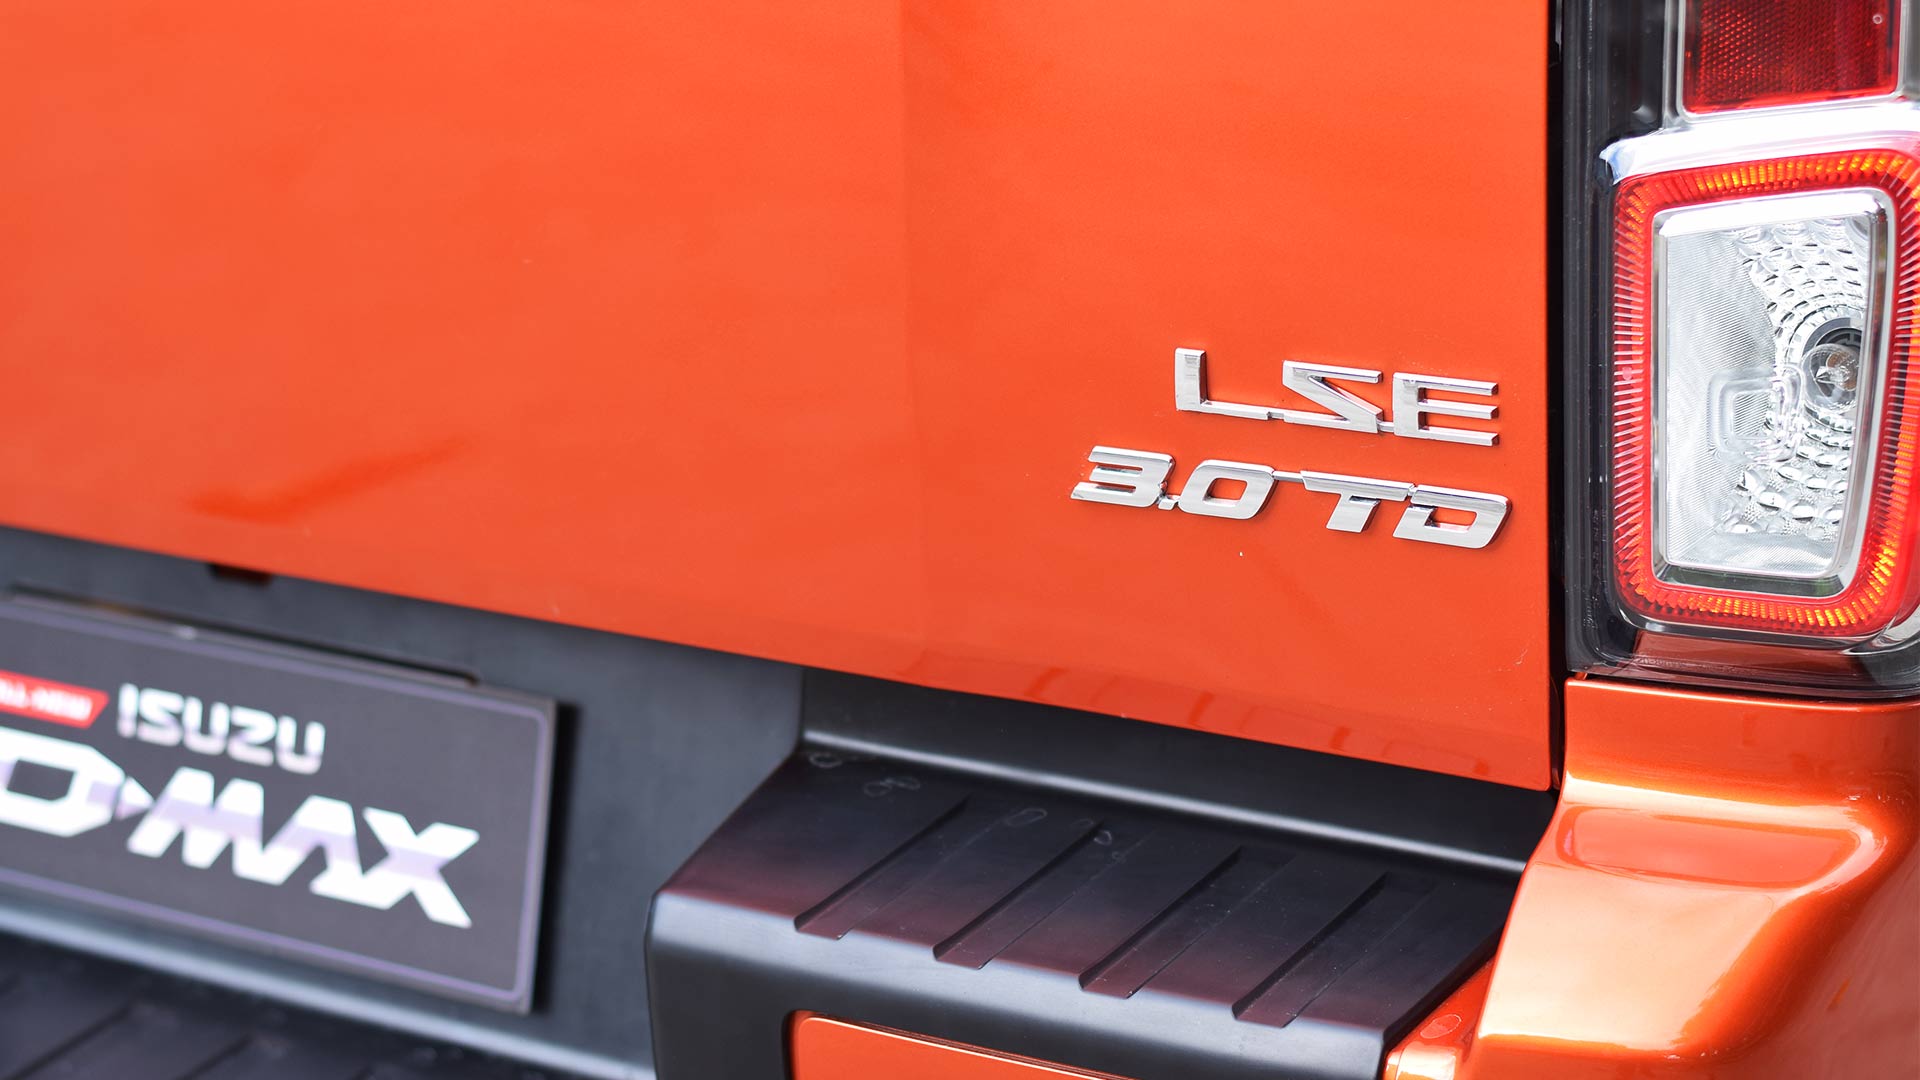 The 2021 Isuzu D-Max emblem close up